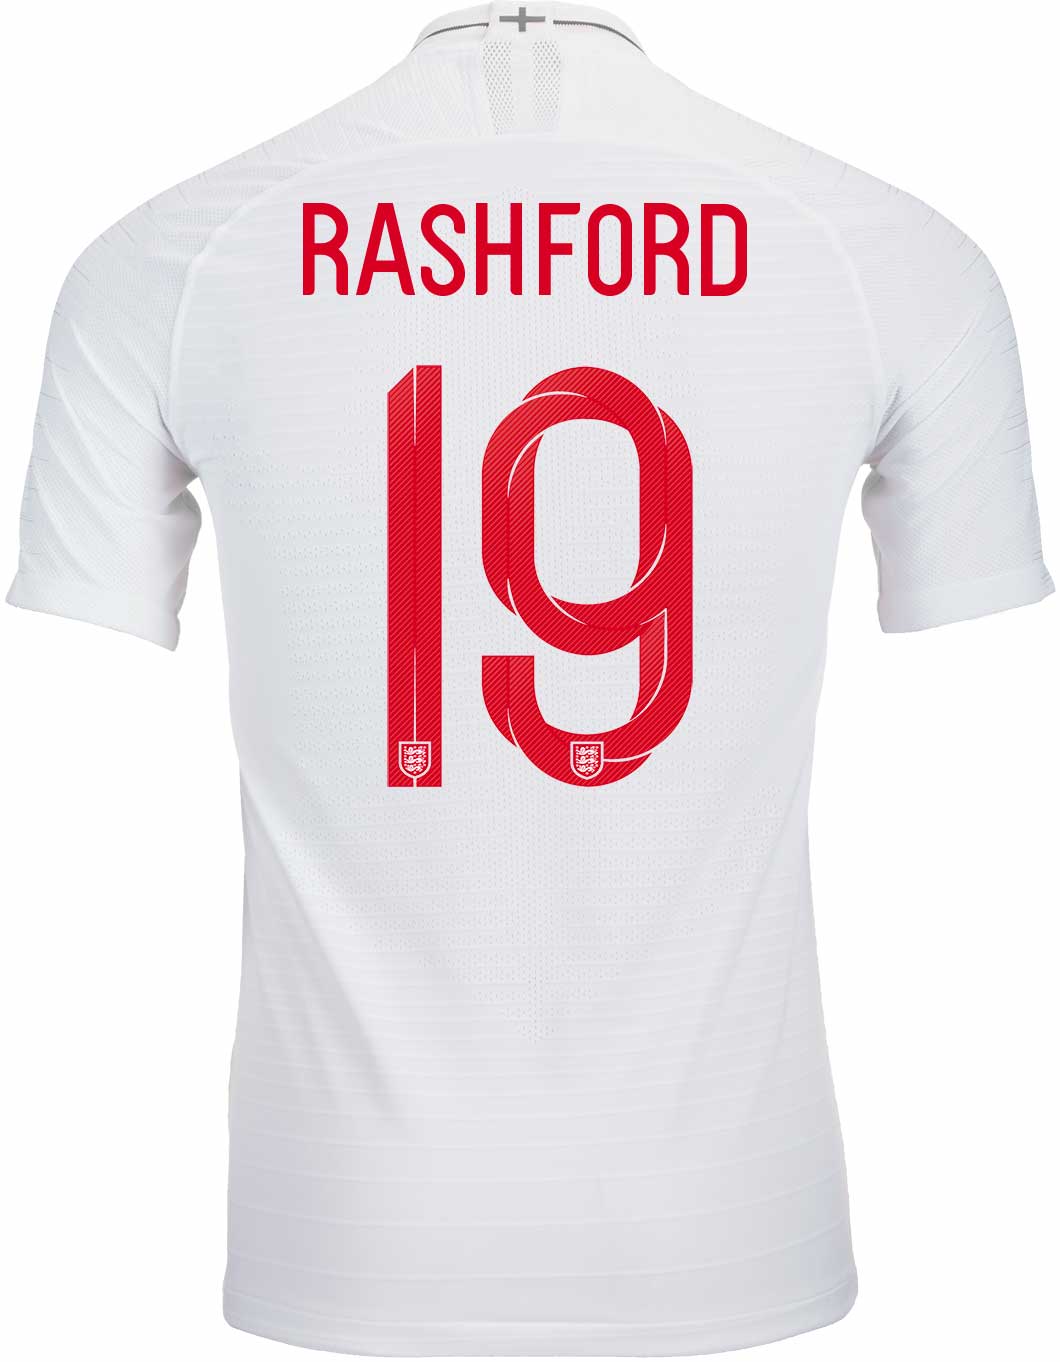 marcus rashford youth jersey